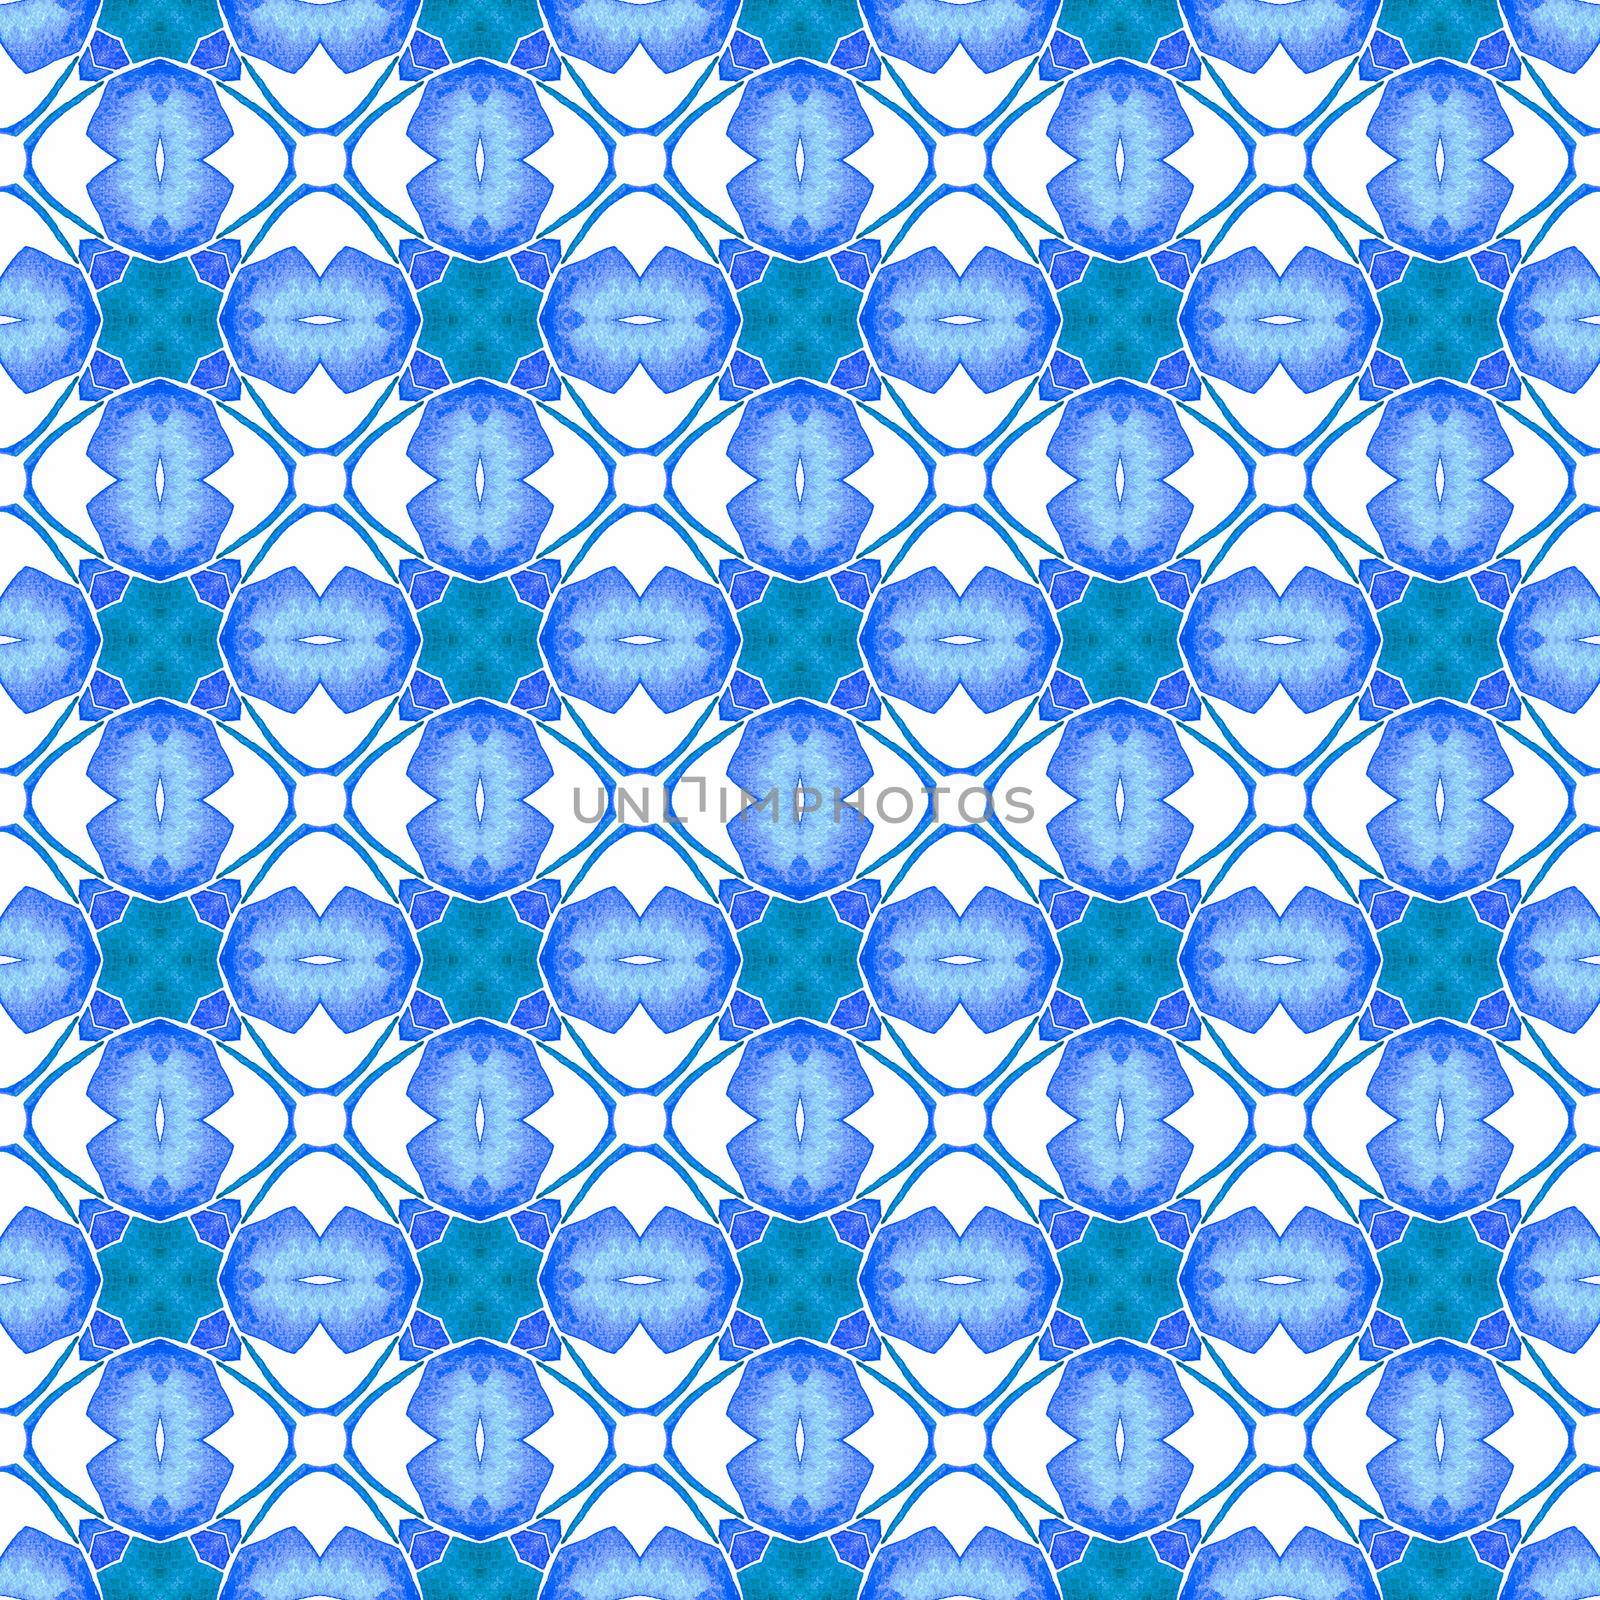 Chevron watercolor pattern. Blue dazzling boho by beginagain